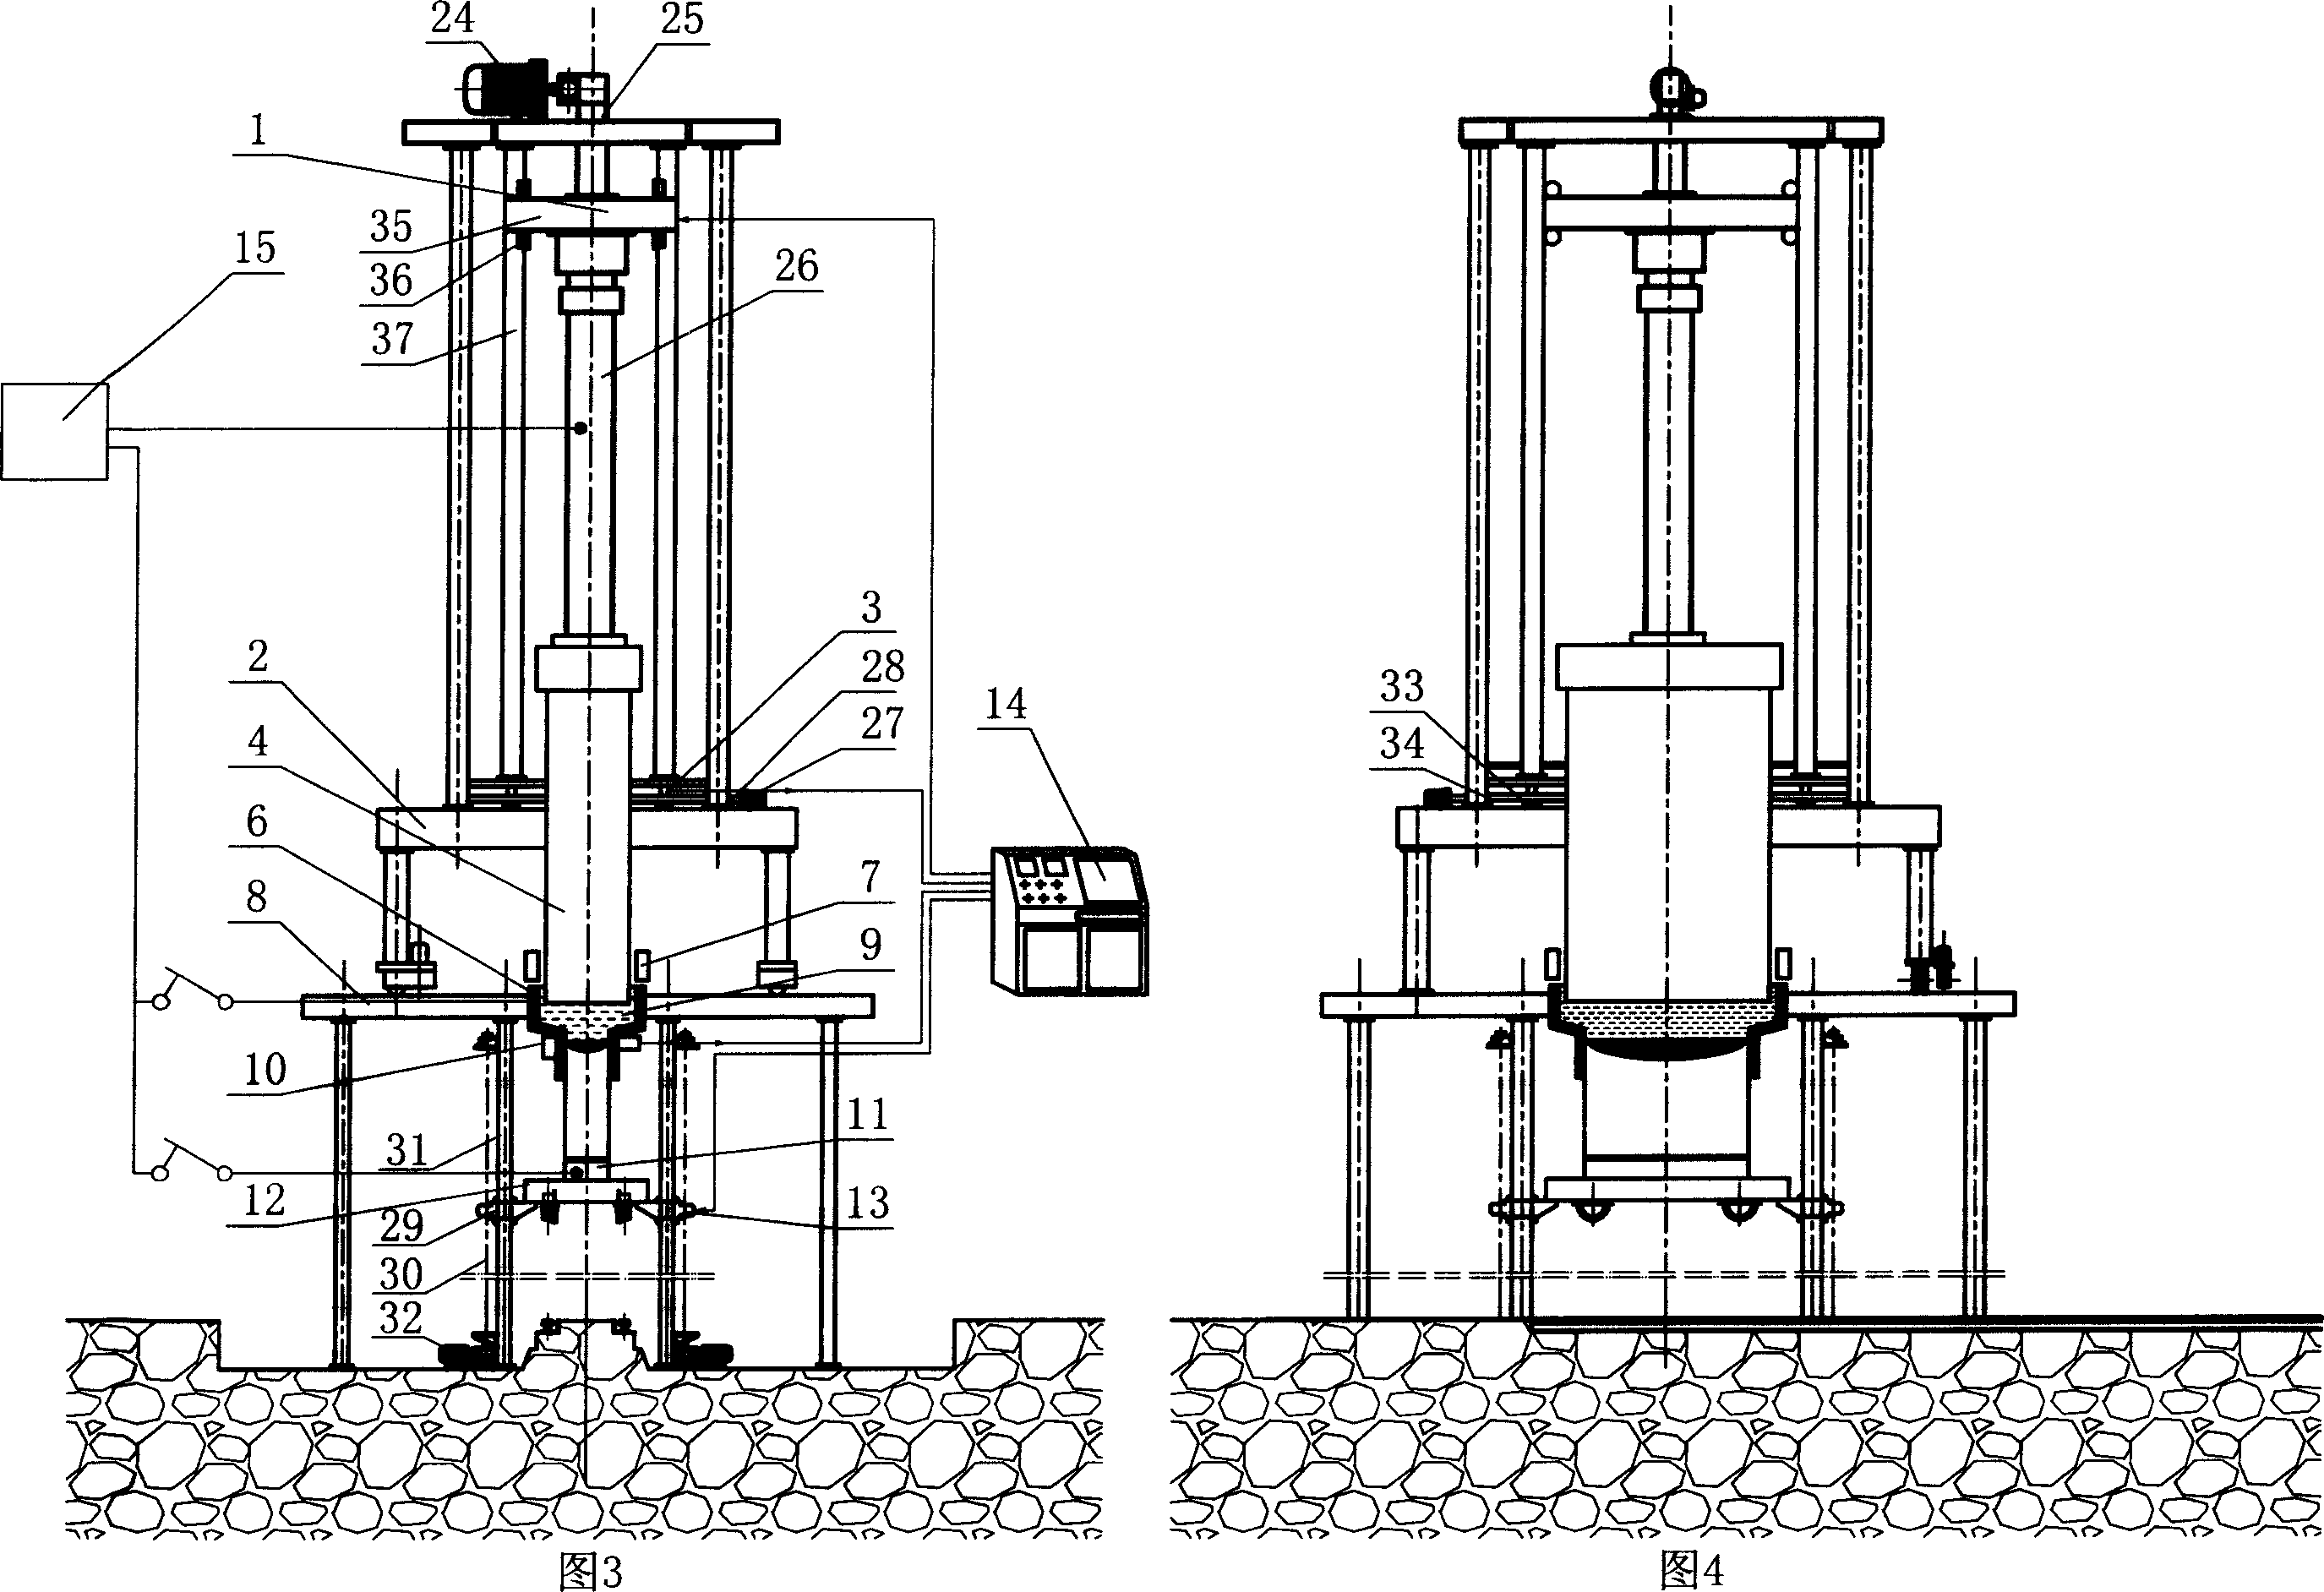 Plate blank electroslag furnace